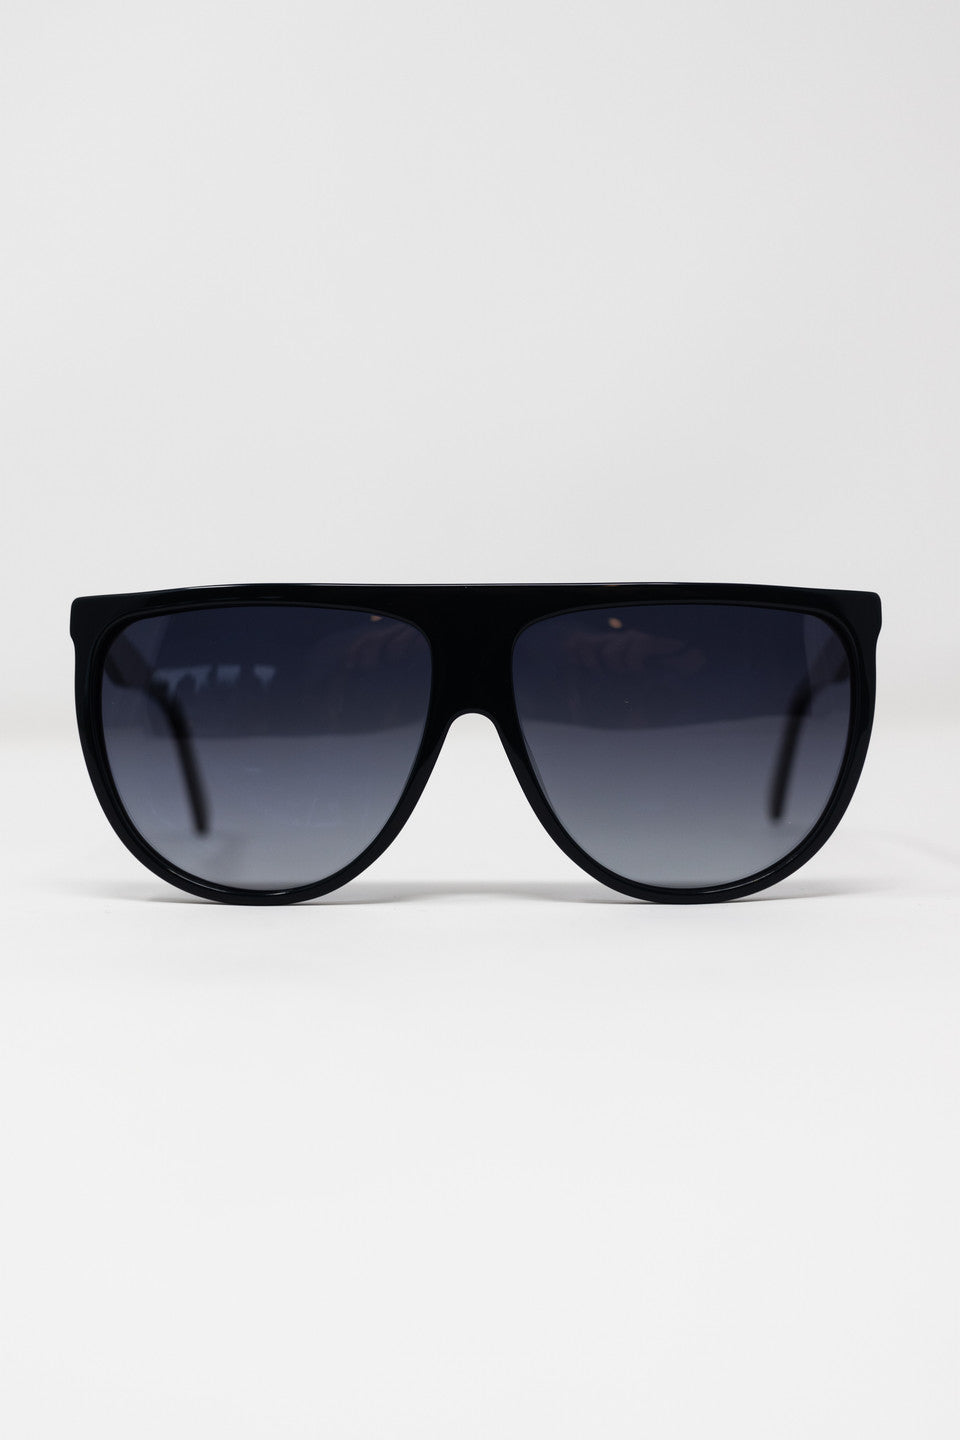 Zaire Flat Edge Acetate Sunglasses - black - Priv Collection